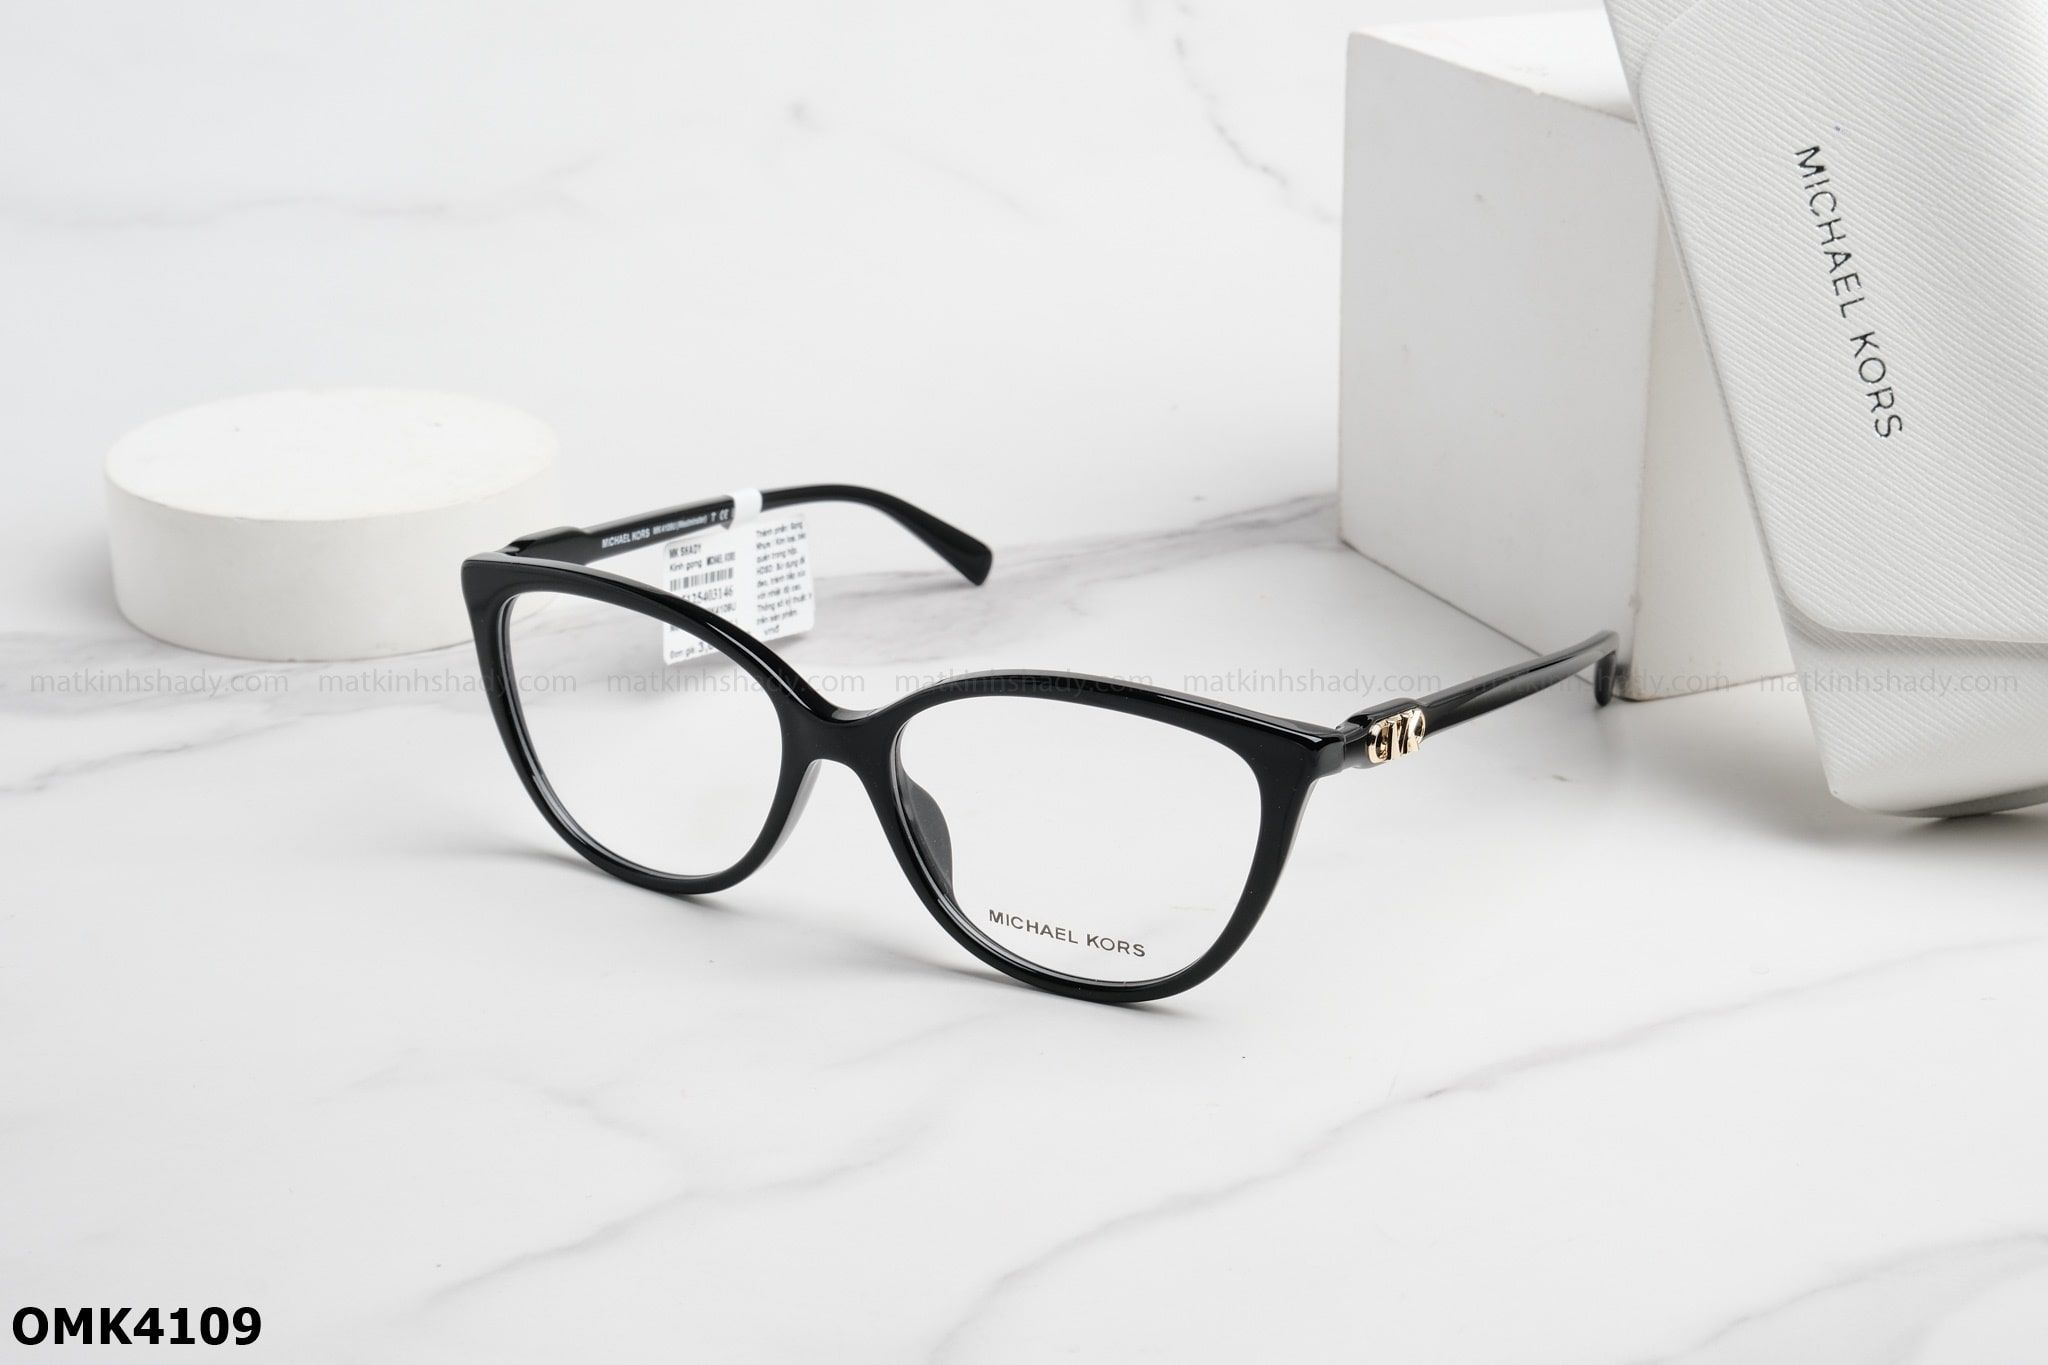  Michael Kors Eyewear - Glasses - 0MK4109 